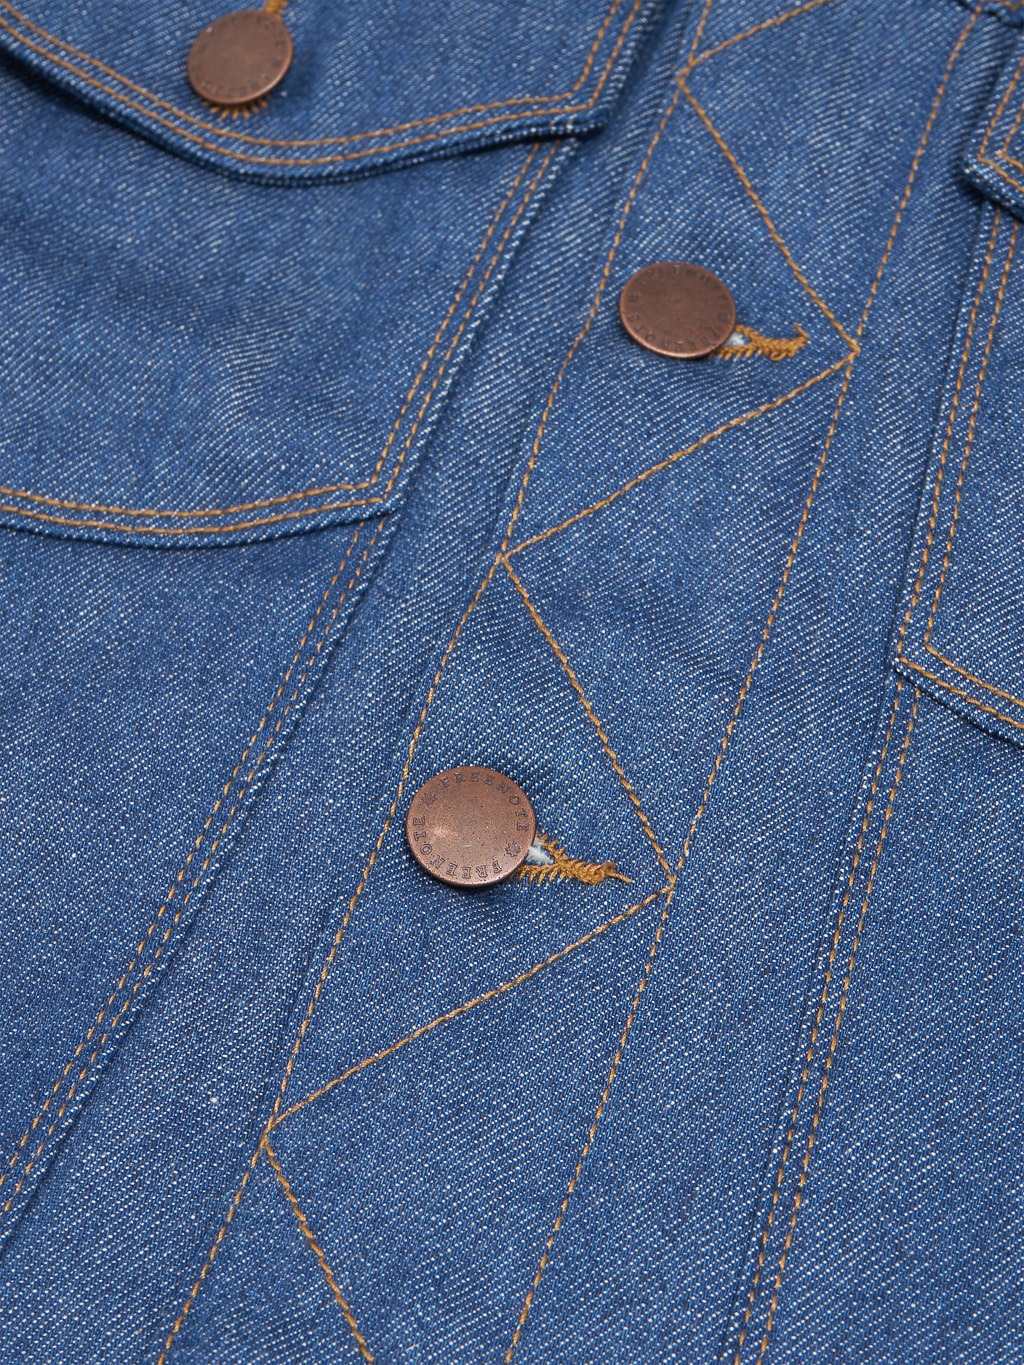 freenote cloth classic denim jacket vintage blue denim needle details